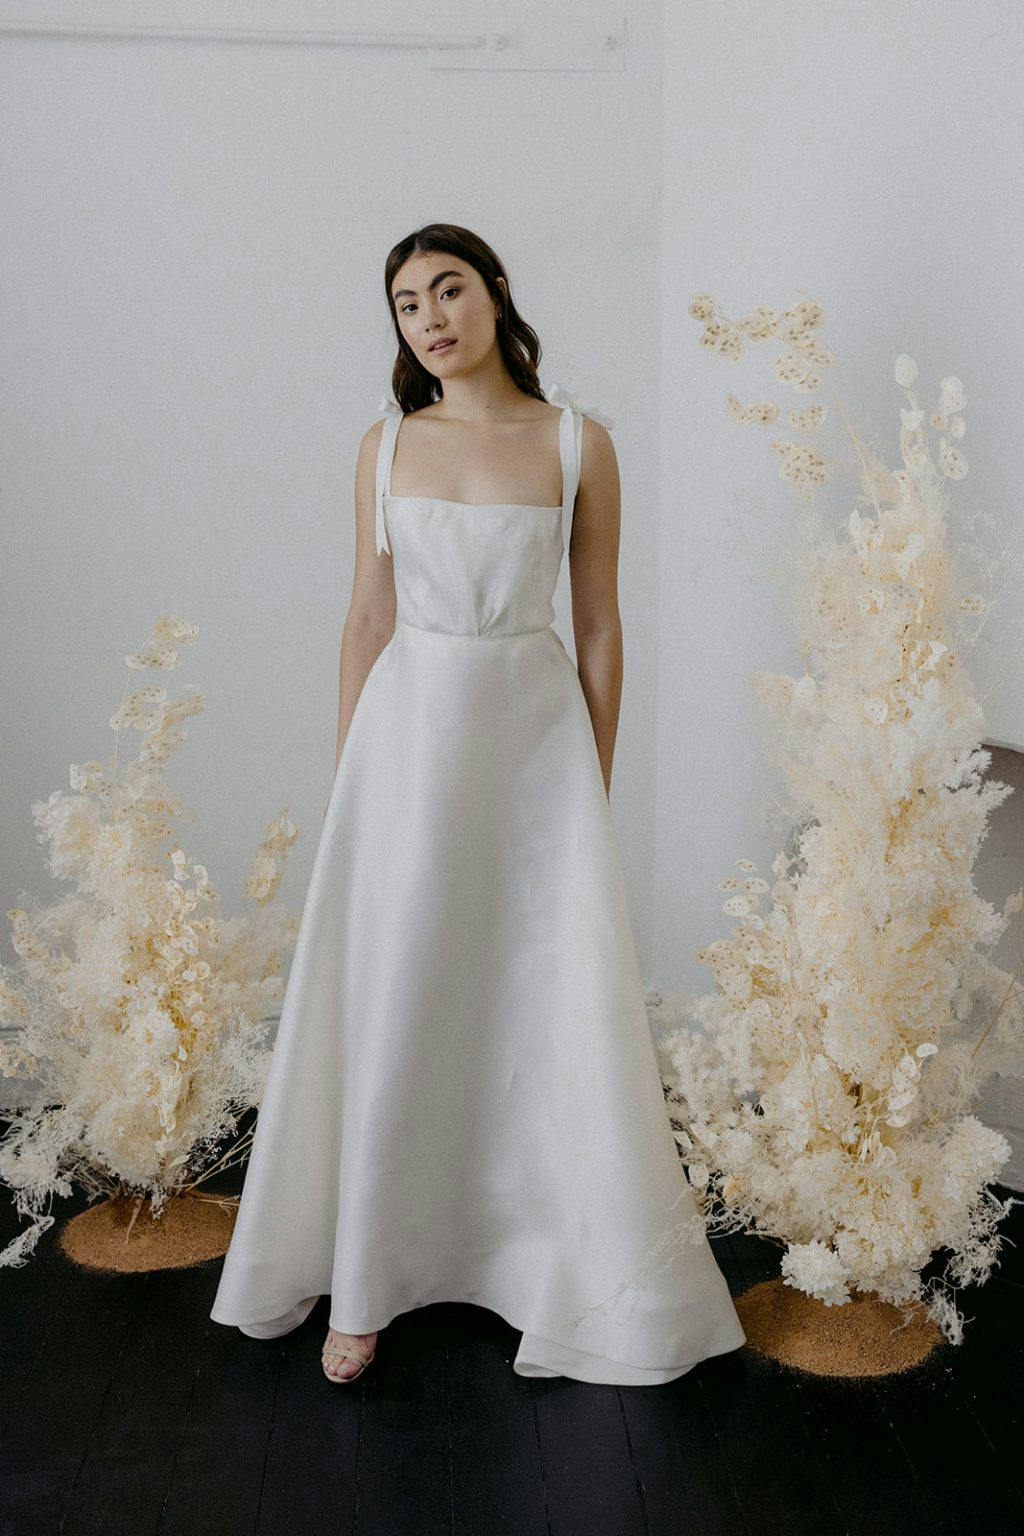 Perth wedding dress designers, Maevana